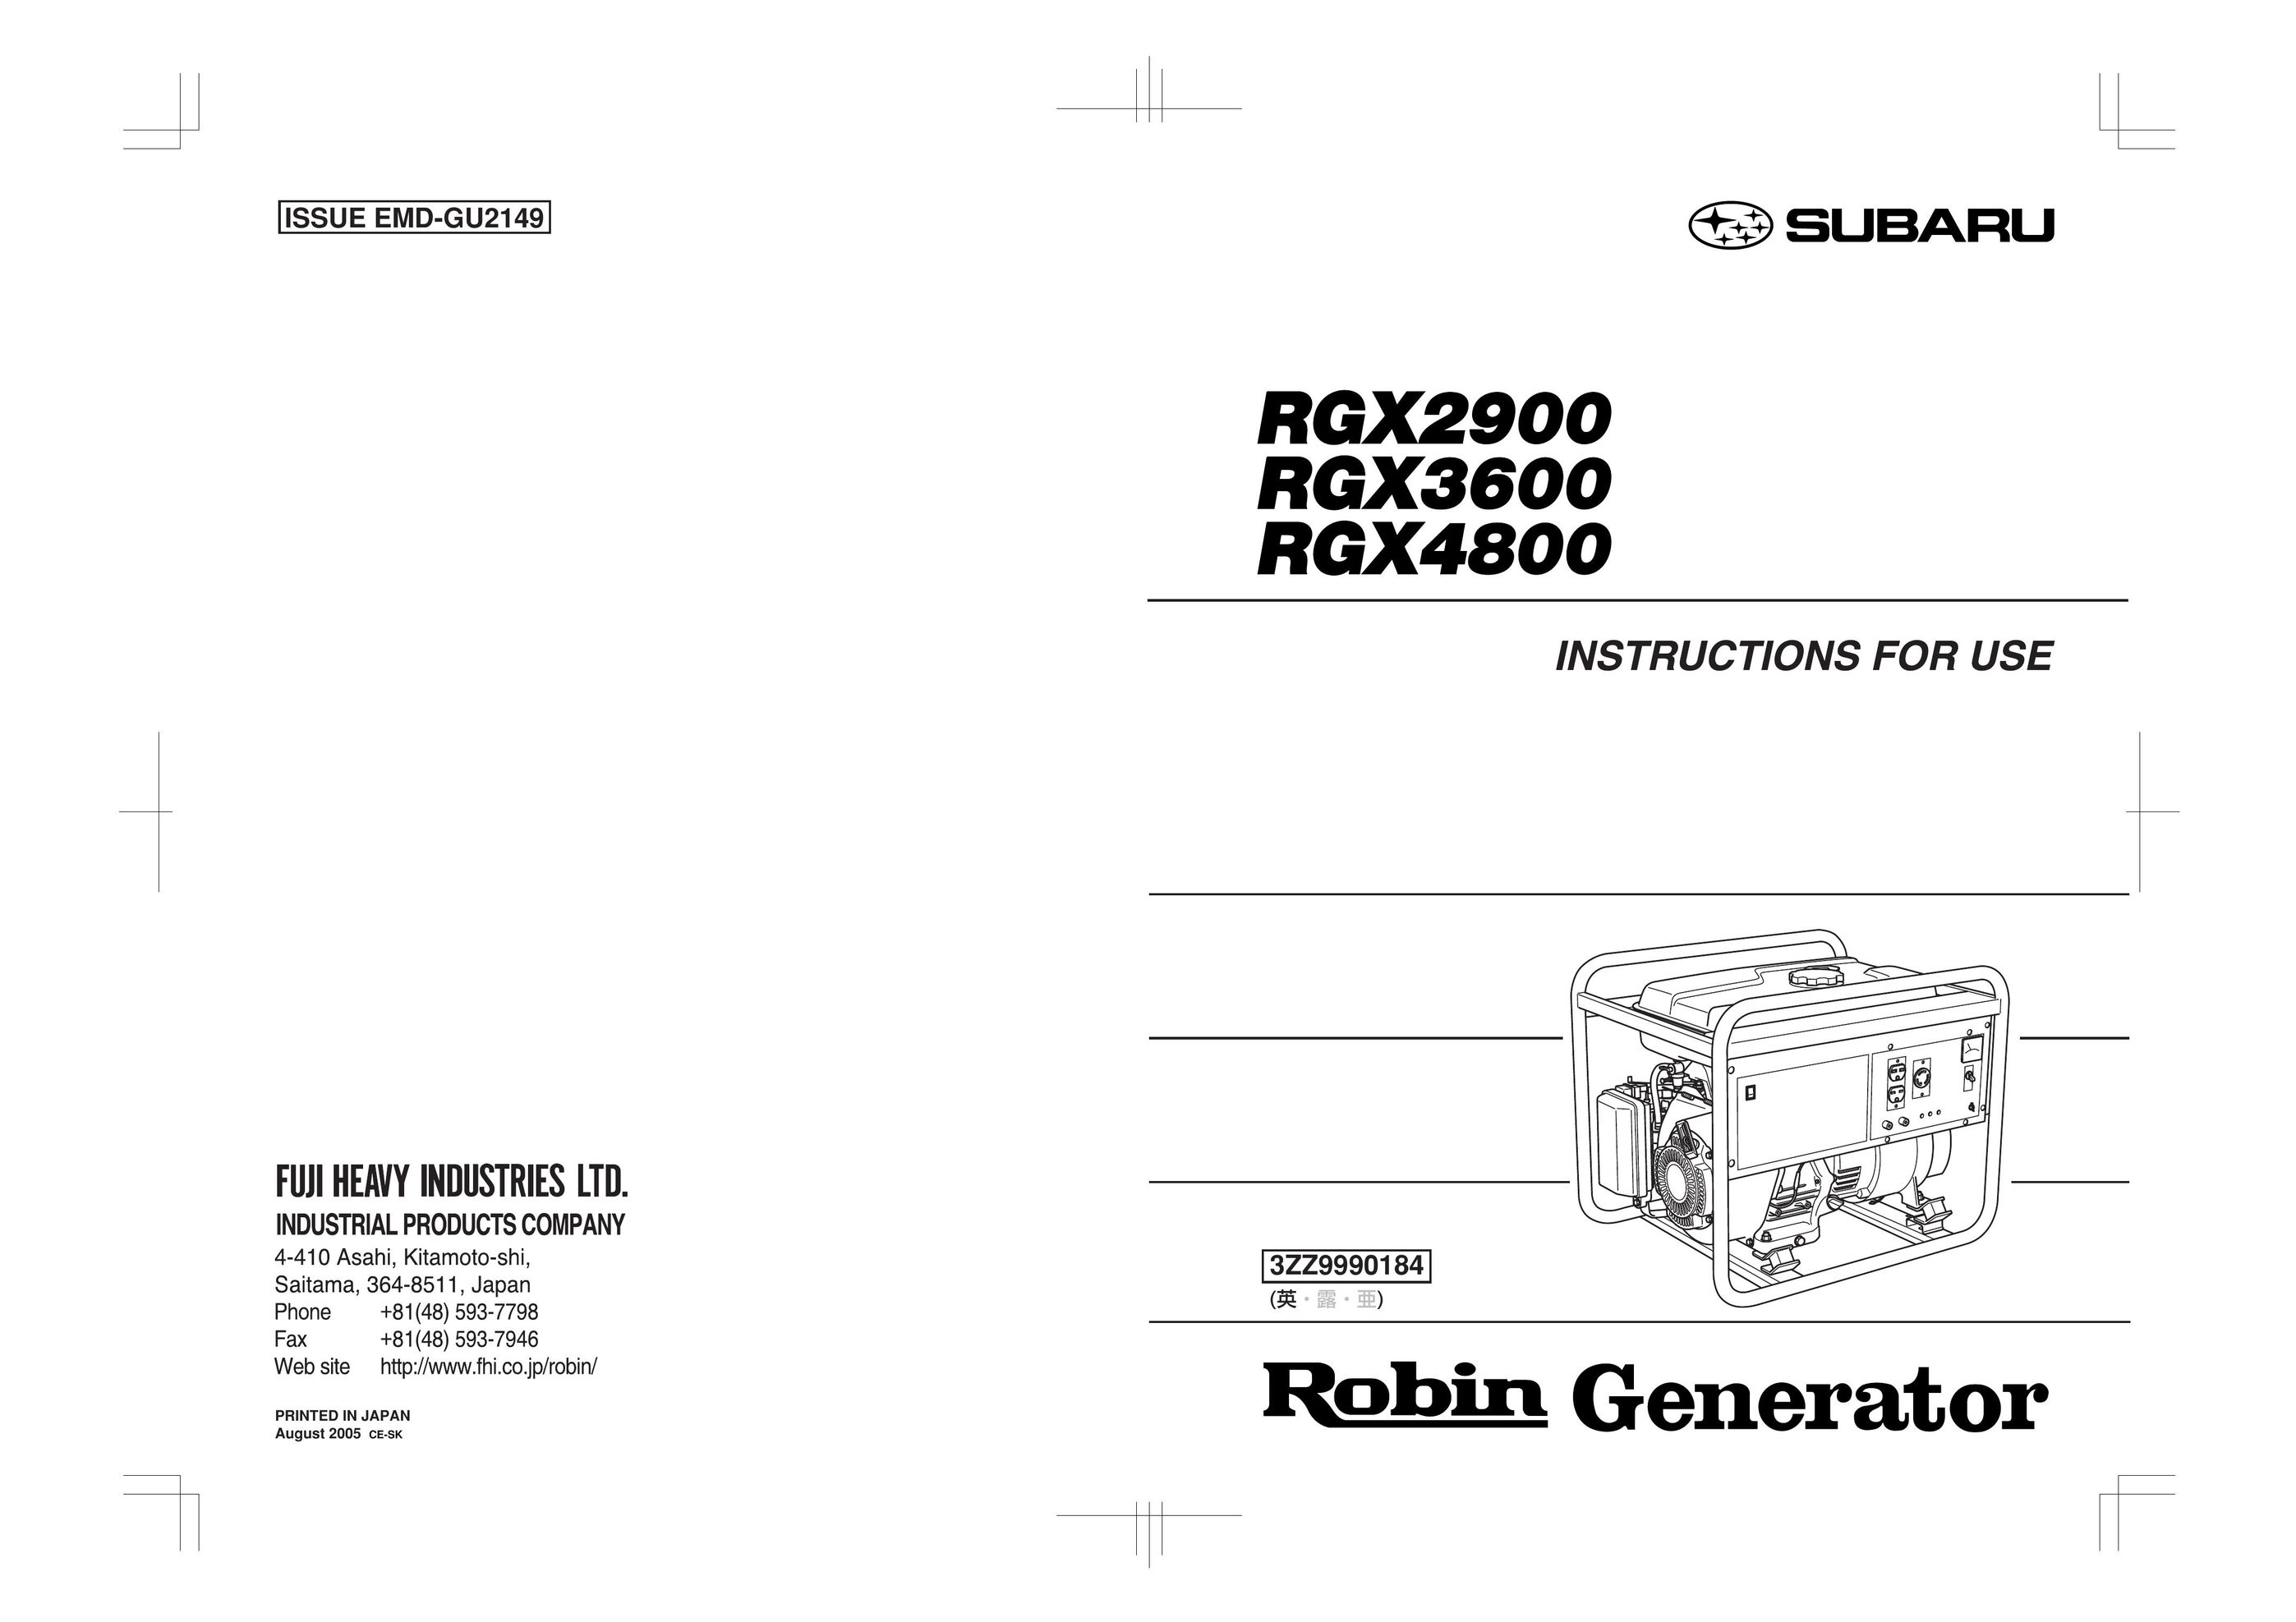 Subaru Robin Power Products RGX4800 Laptop User Manual